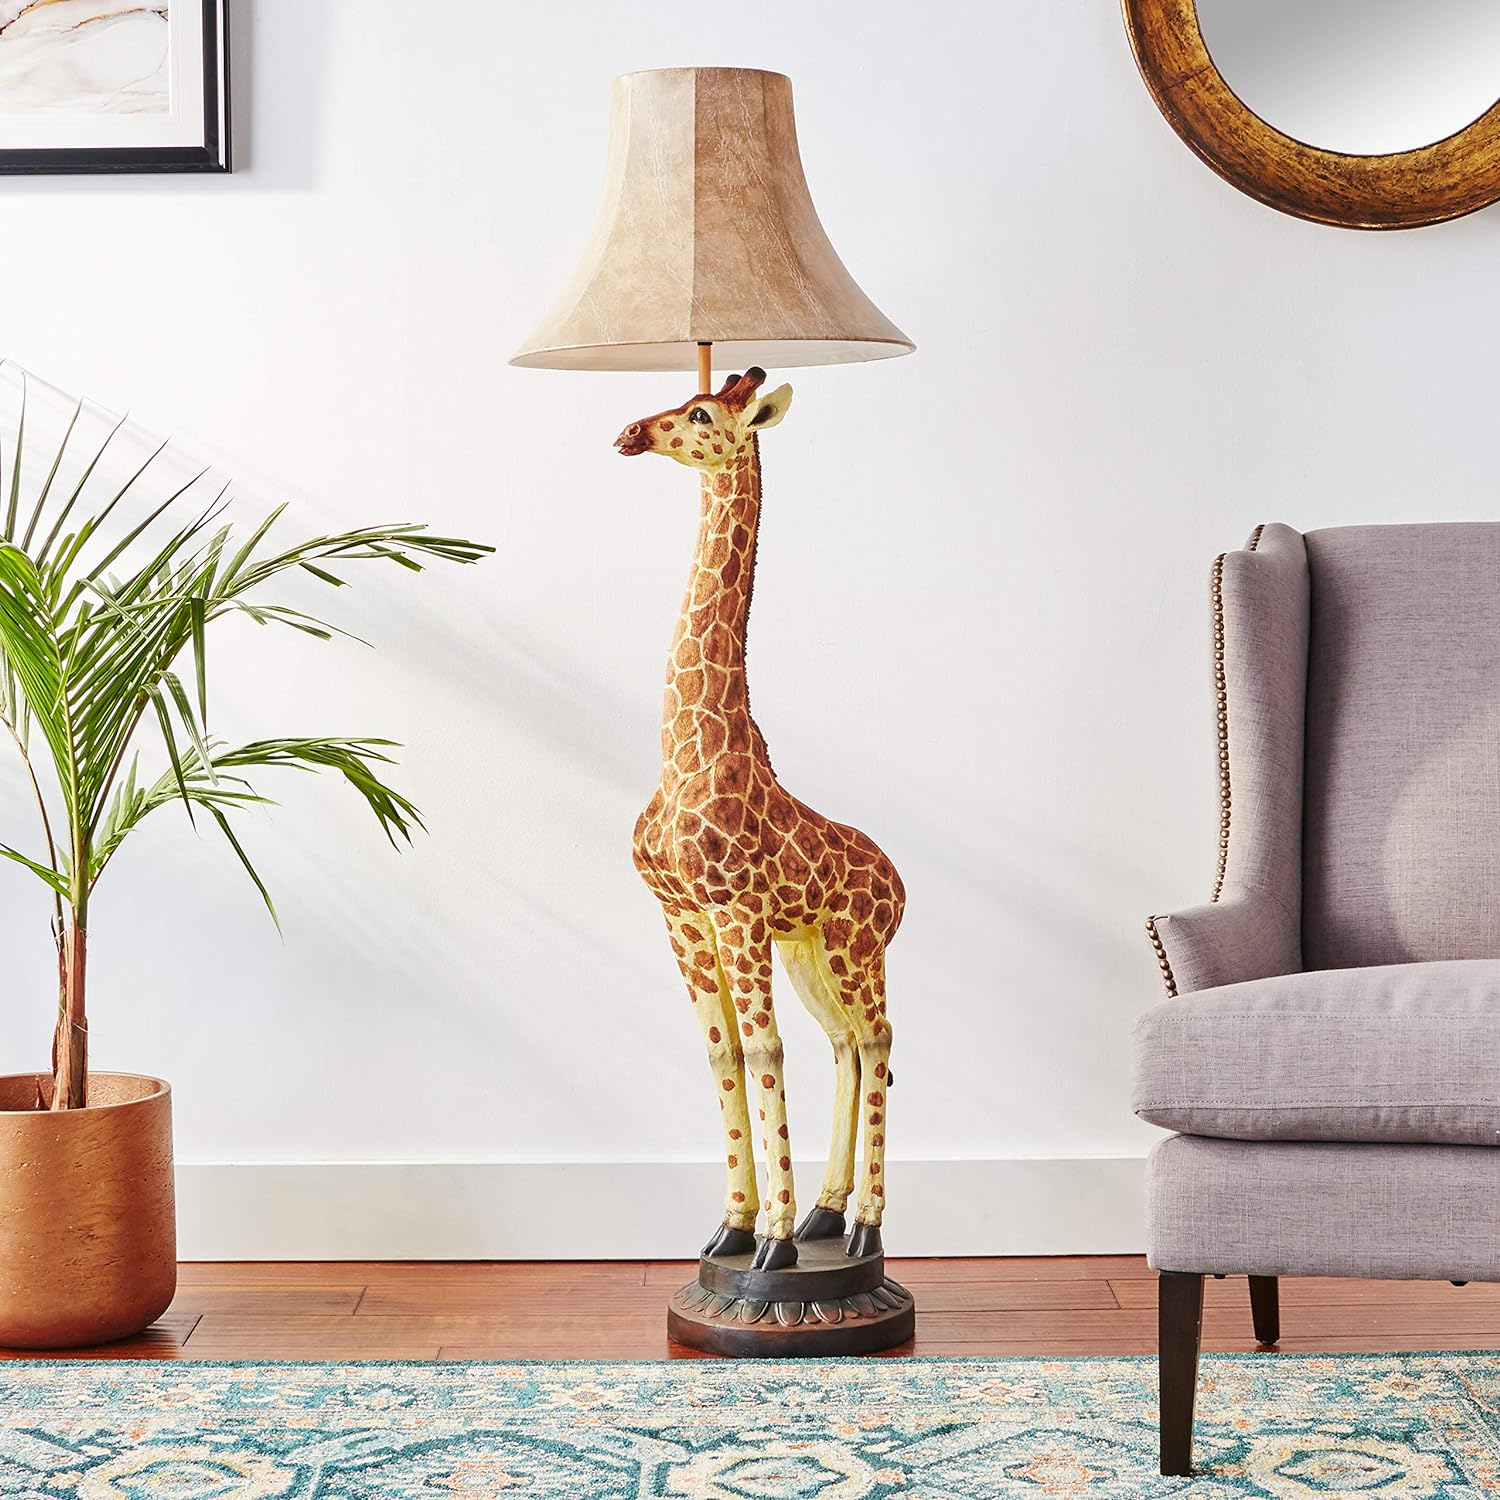 Giraffe Floor Lamp - best lamps for kids rooms